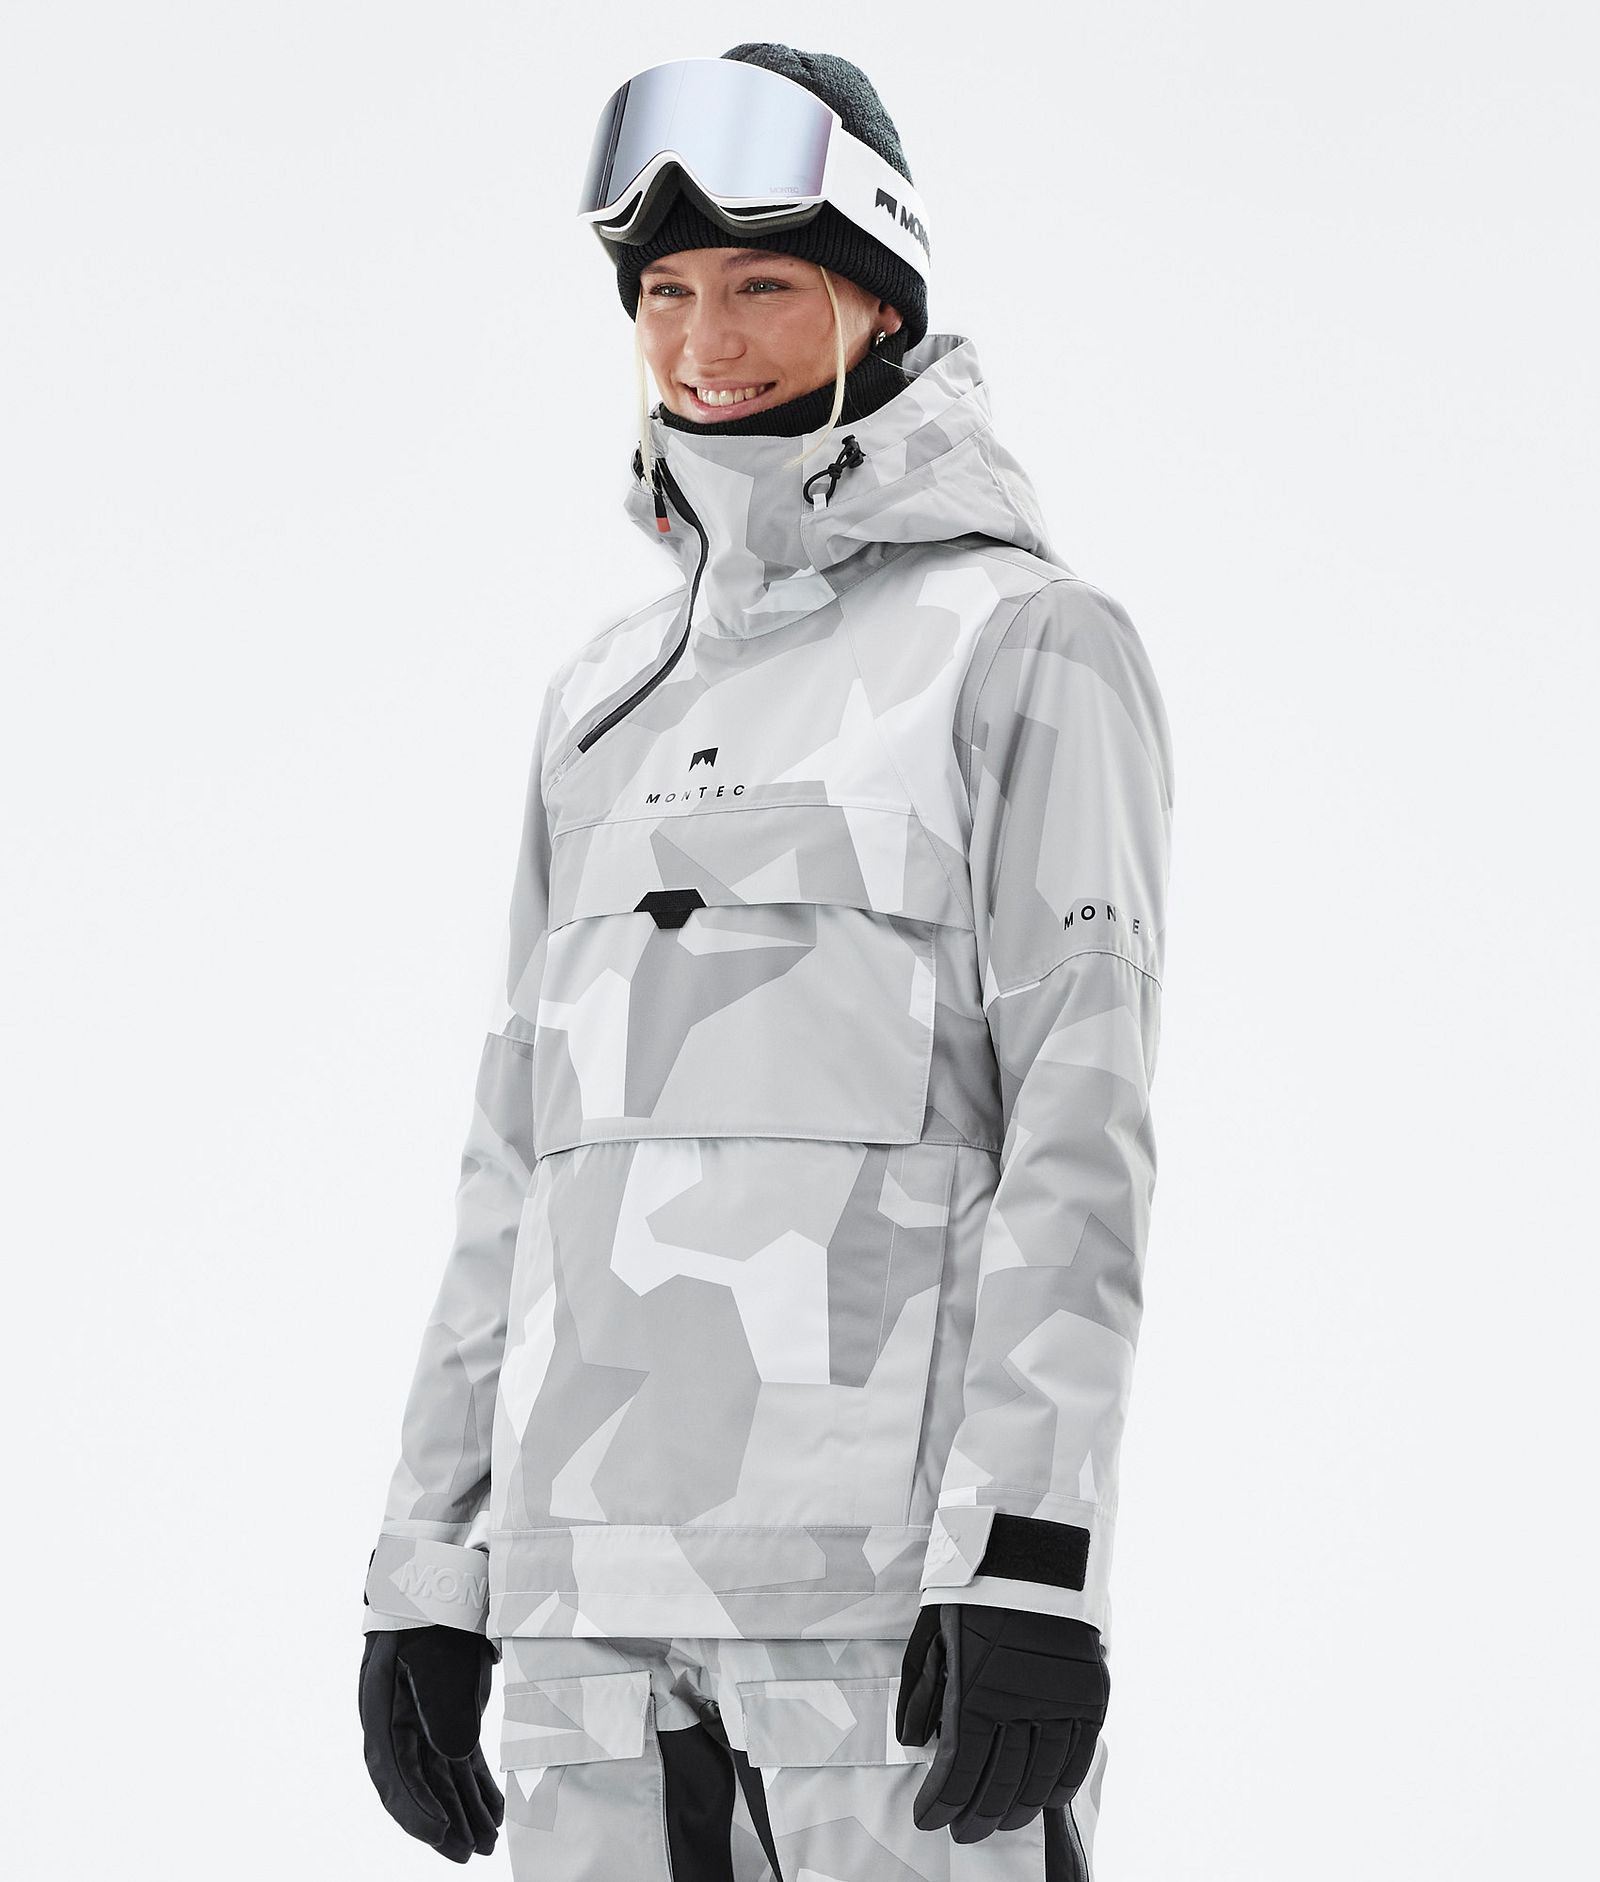 LADIES TOPSHOP SNO Ski Jacket White and Silver Camouflage Size 10